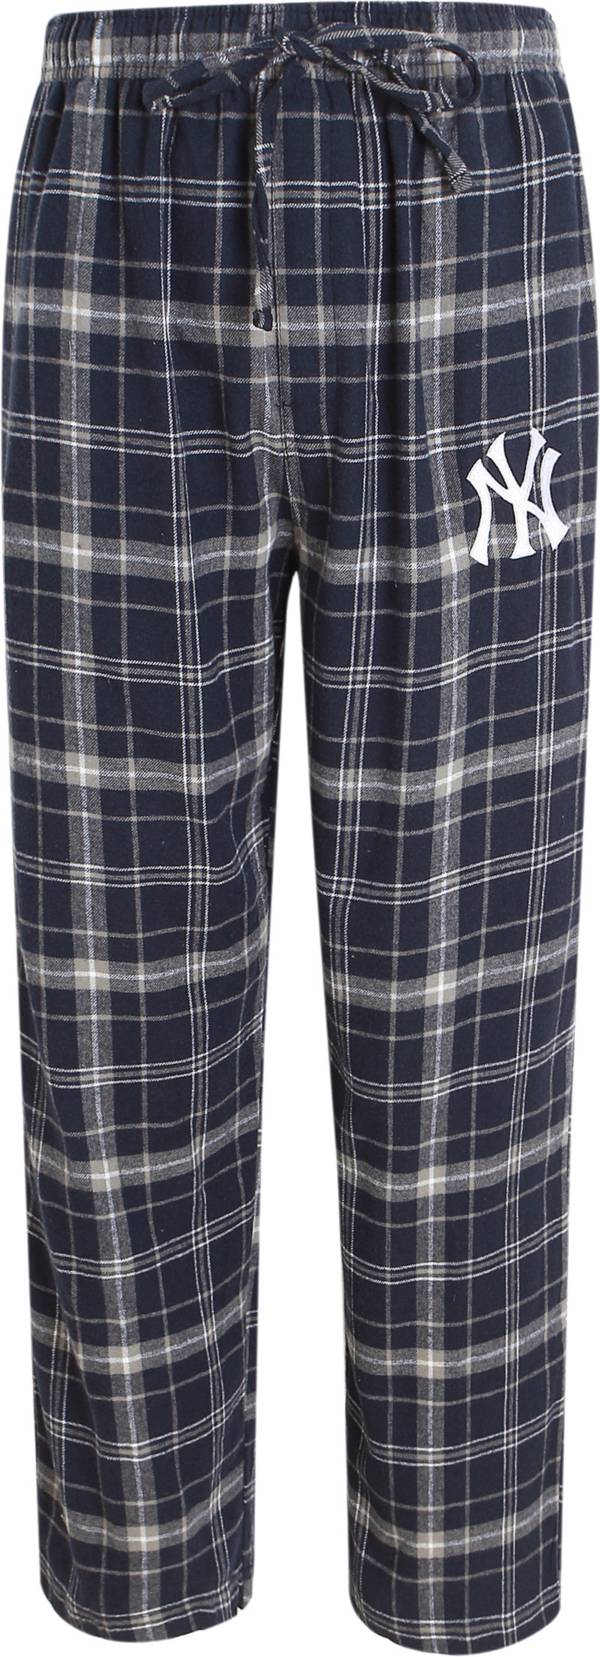 MLB Team Apparel Men's Big & Tall New York Yankees Navy Sleep Pant product image